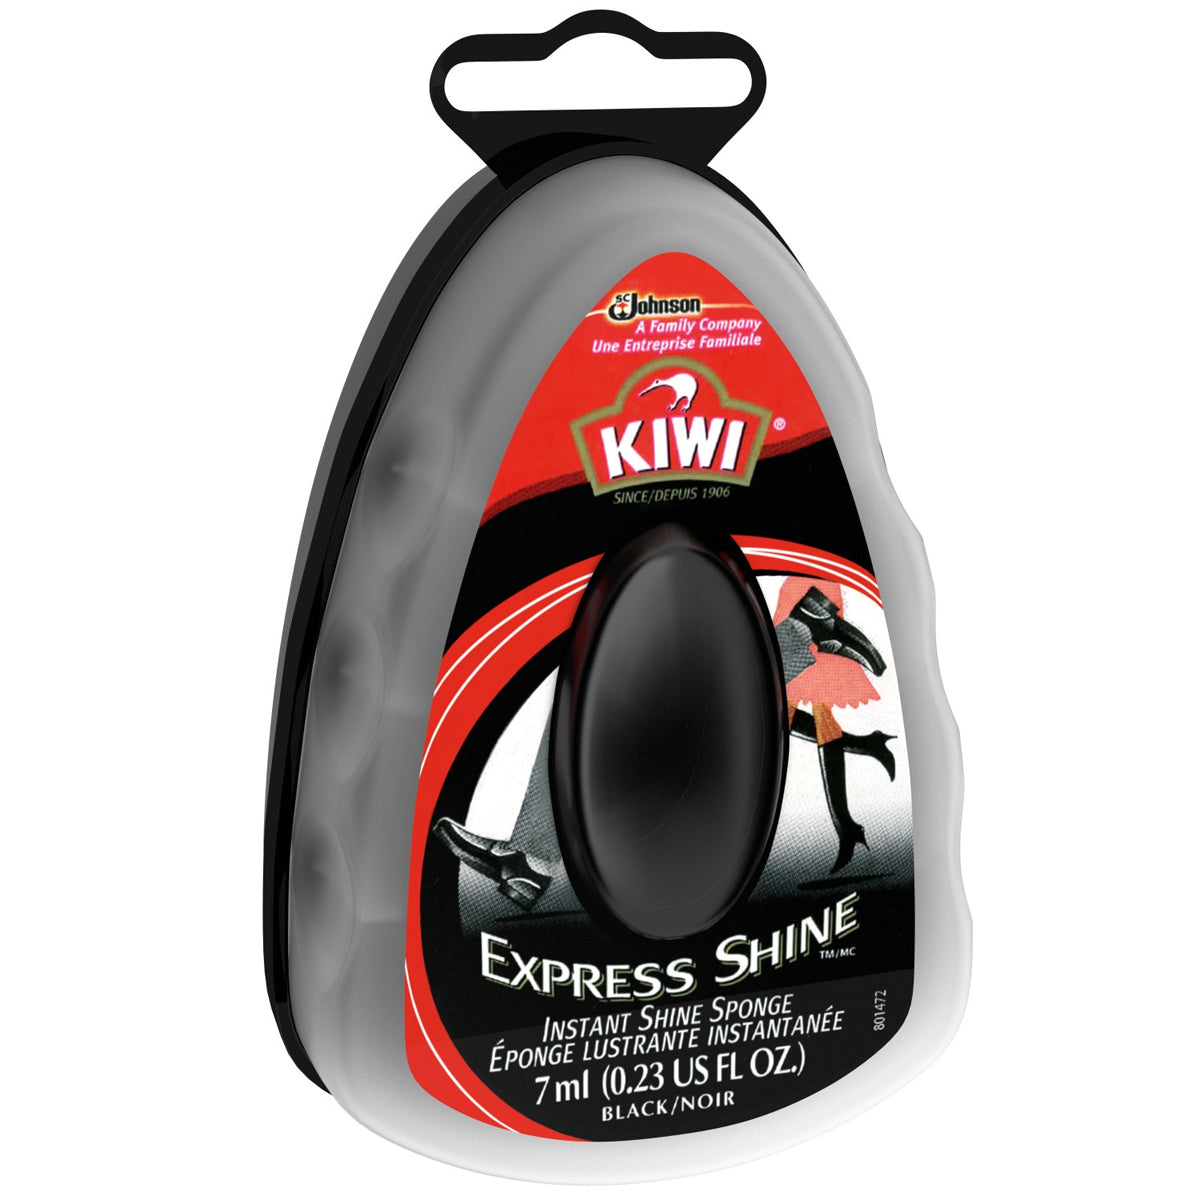 Kiwi Select Clear Express Shine Sponge